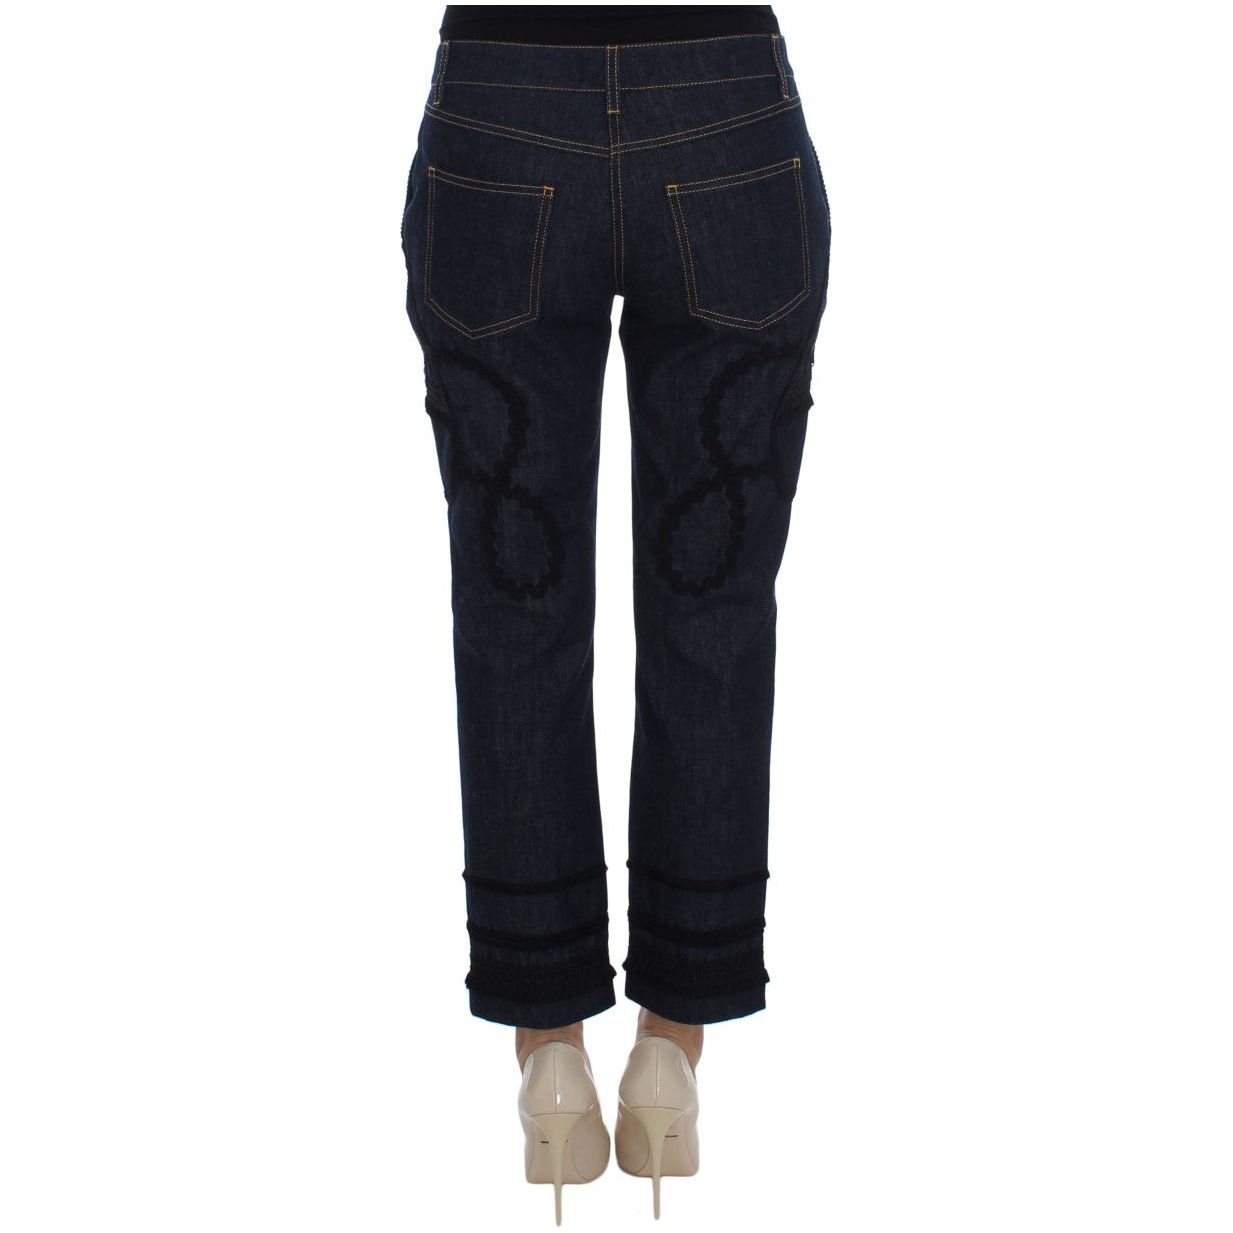 Dolce & Gabbana Embroidered Capri Jeans for Elegant Styling blue-denim-cotton-capri-torero-jeans 64487-blue-denim-cotton-capri-torero-jeans-2.jpg